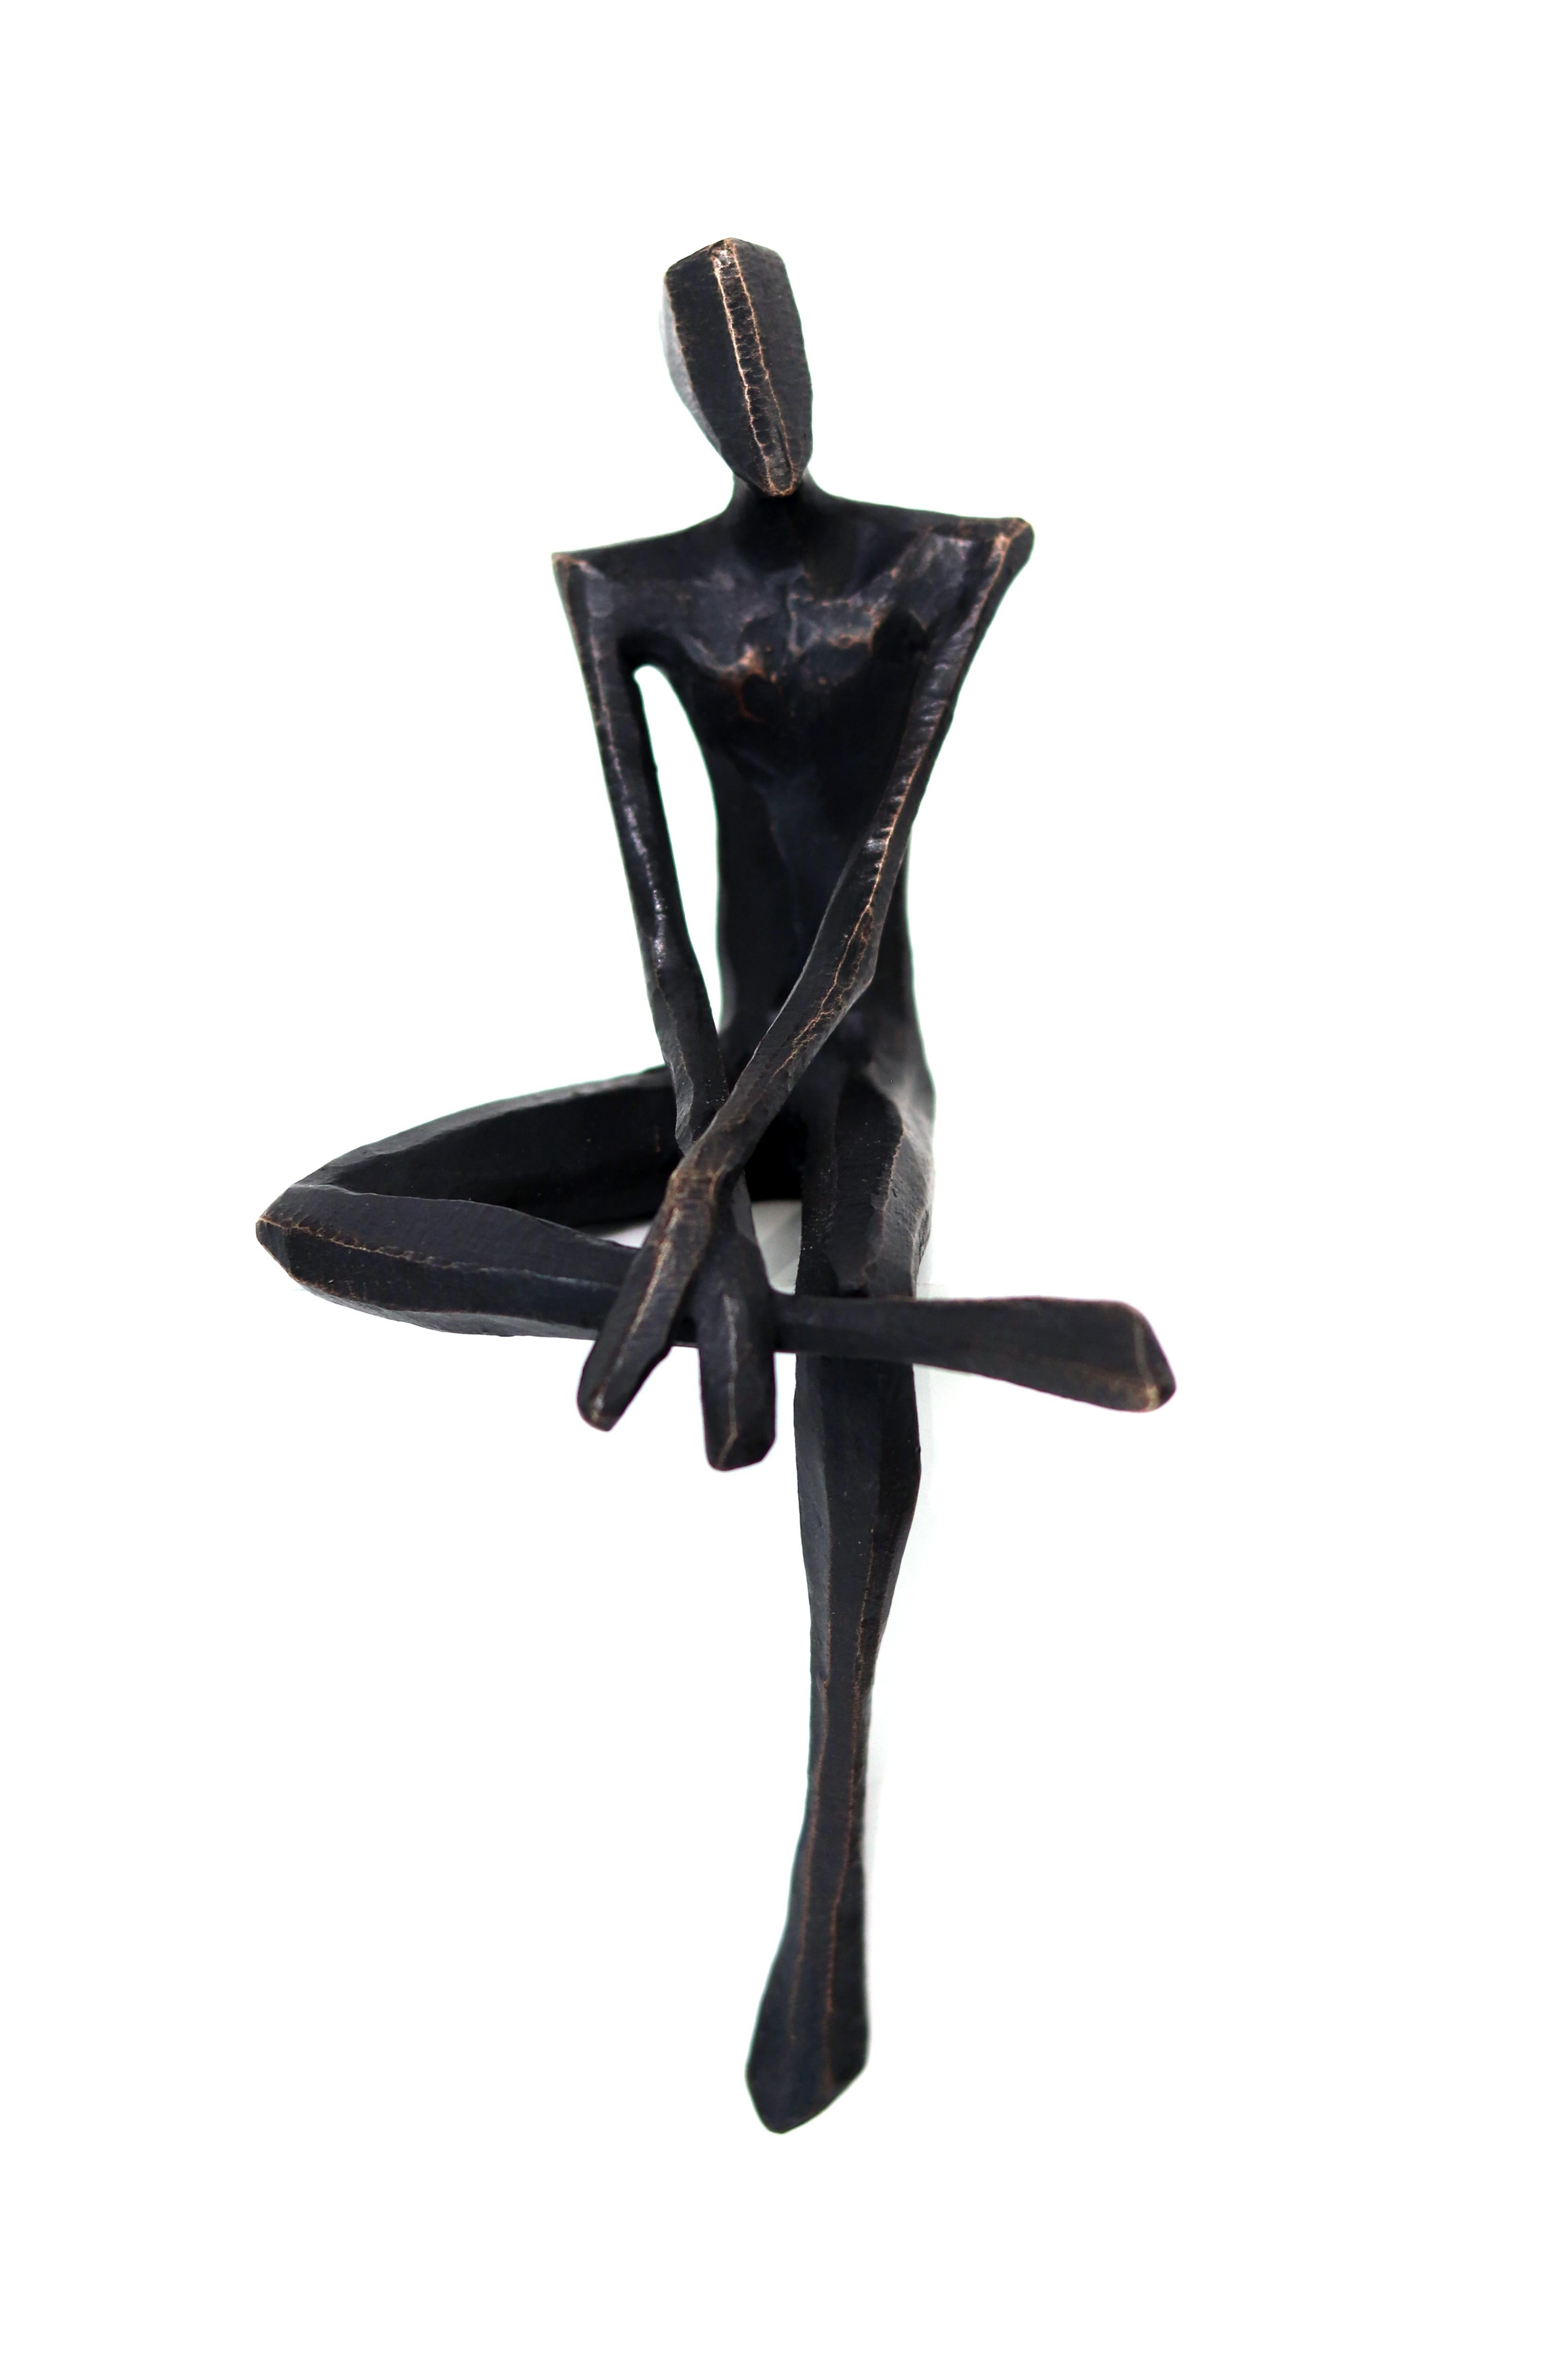 José  - One-of-a-kind Male Cubist Sitting Figure Original Bronze Sculpture